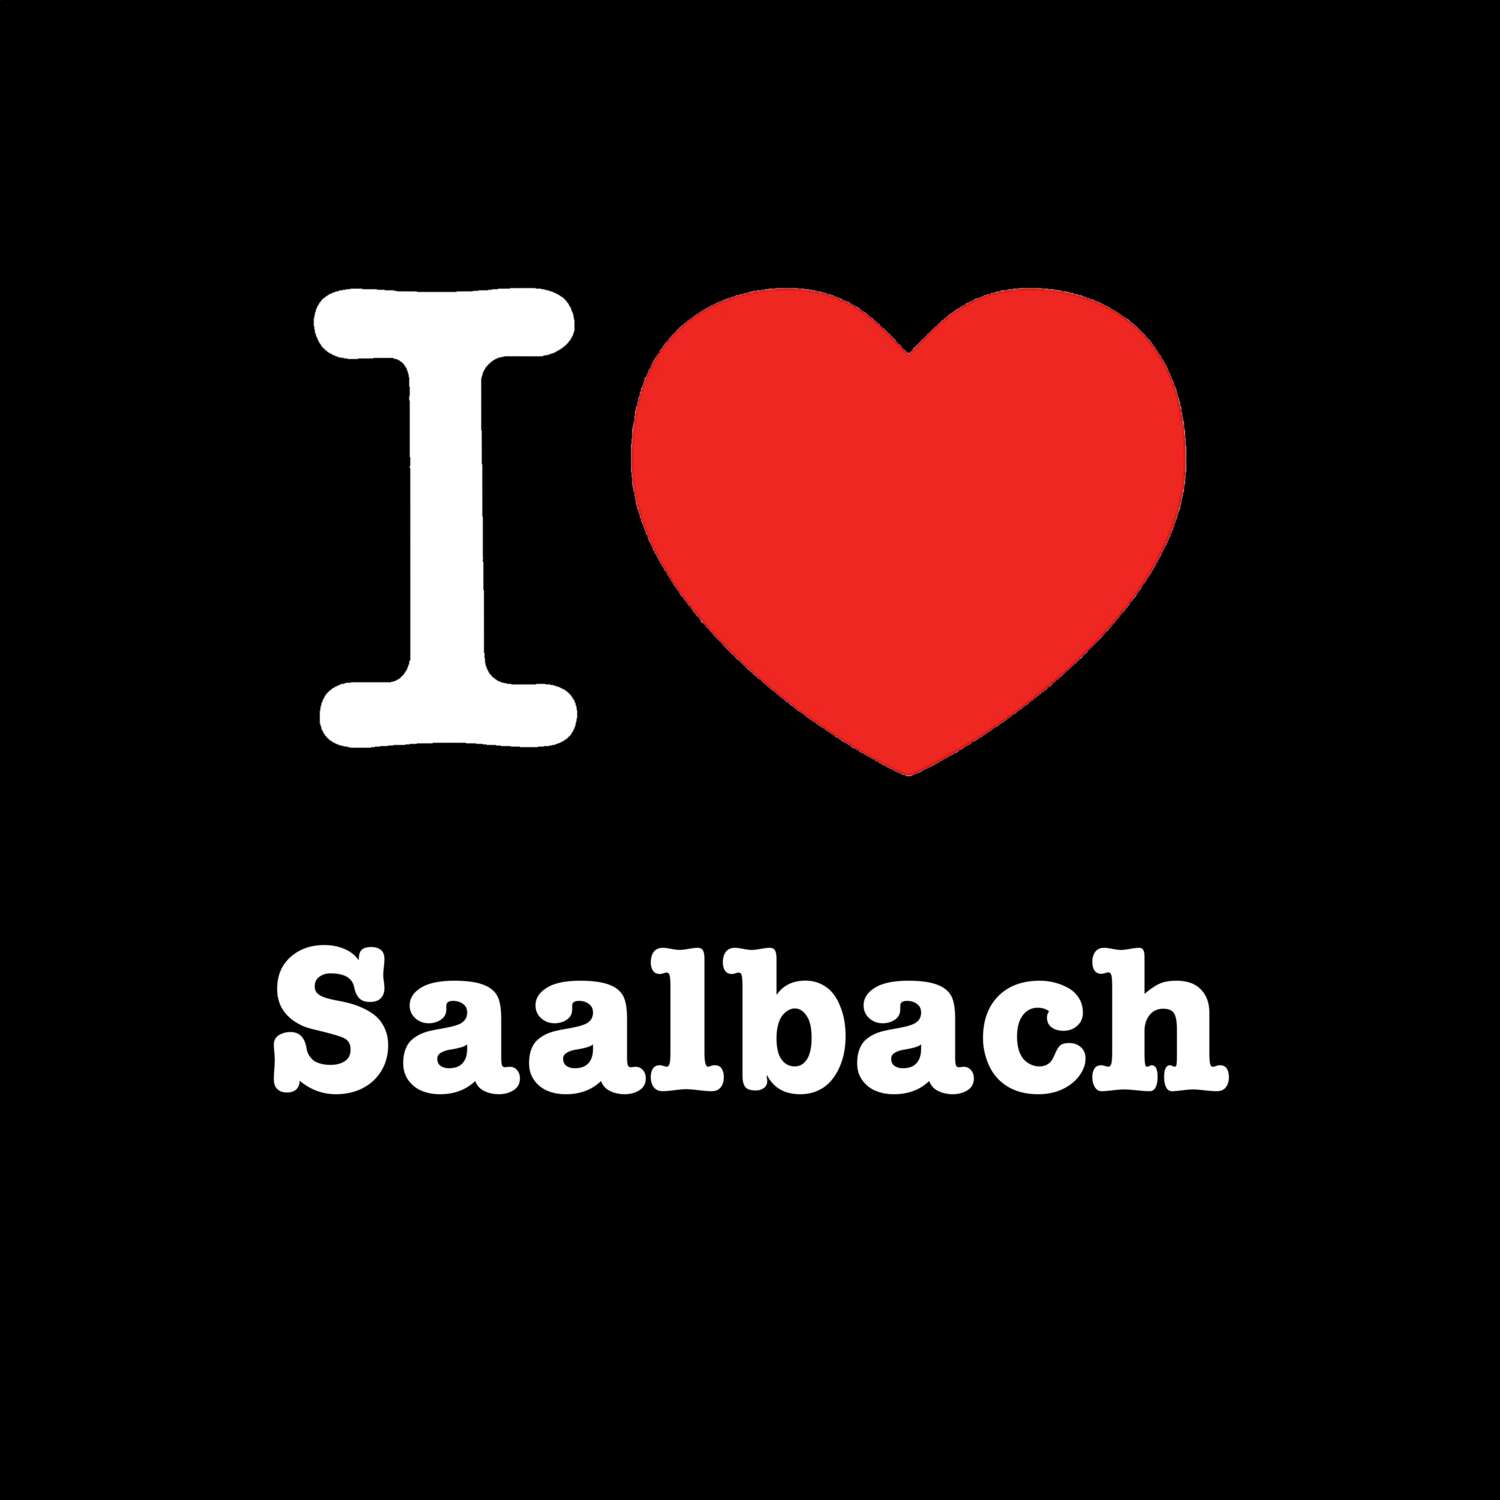 Saalbach T-Shirt »I love«